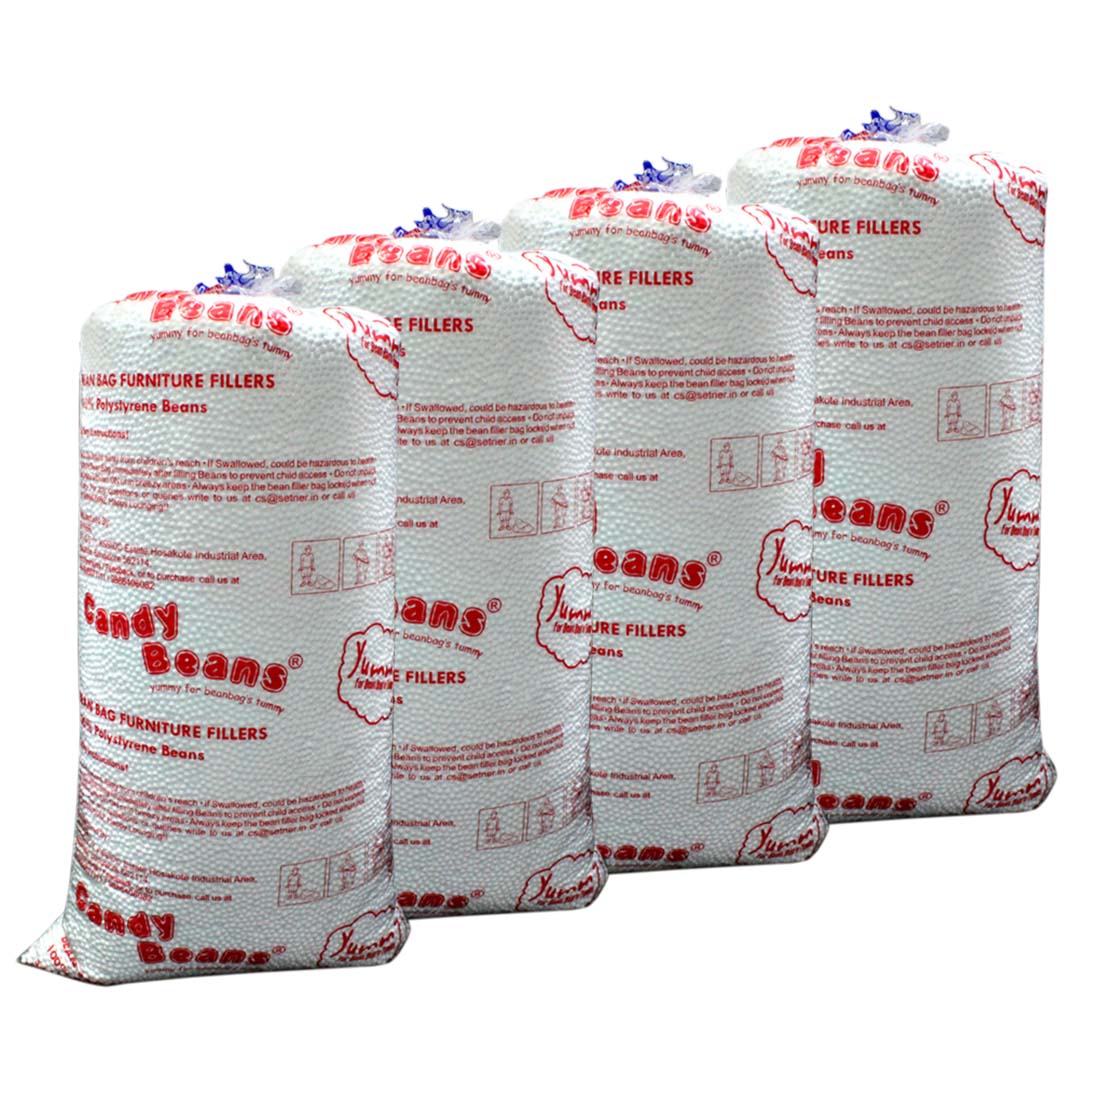 ORKA 100% Virgin High Quality Bean Bag Refill Packet - 2.4 Kg